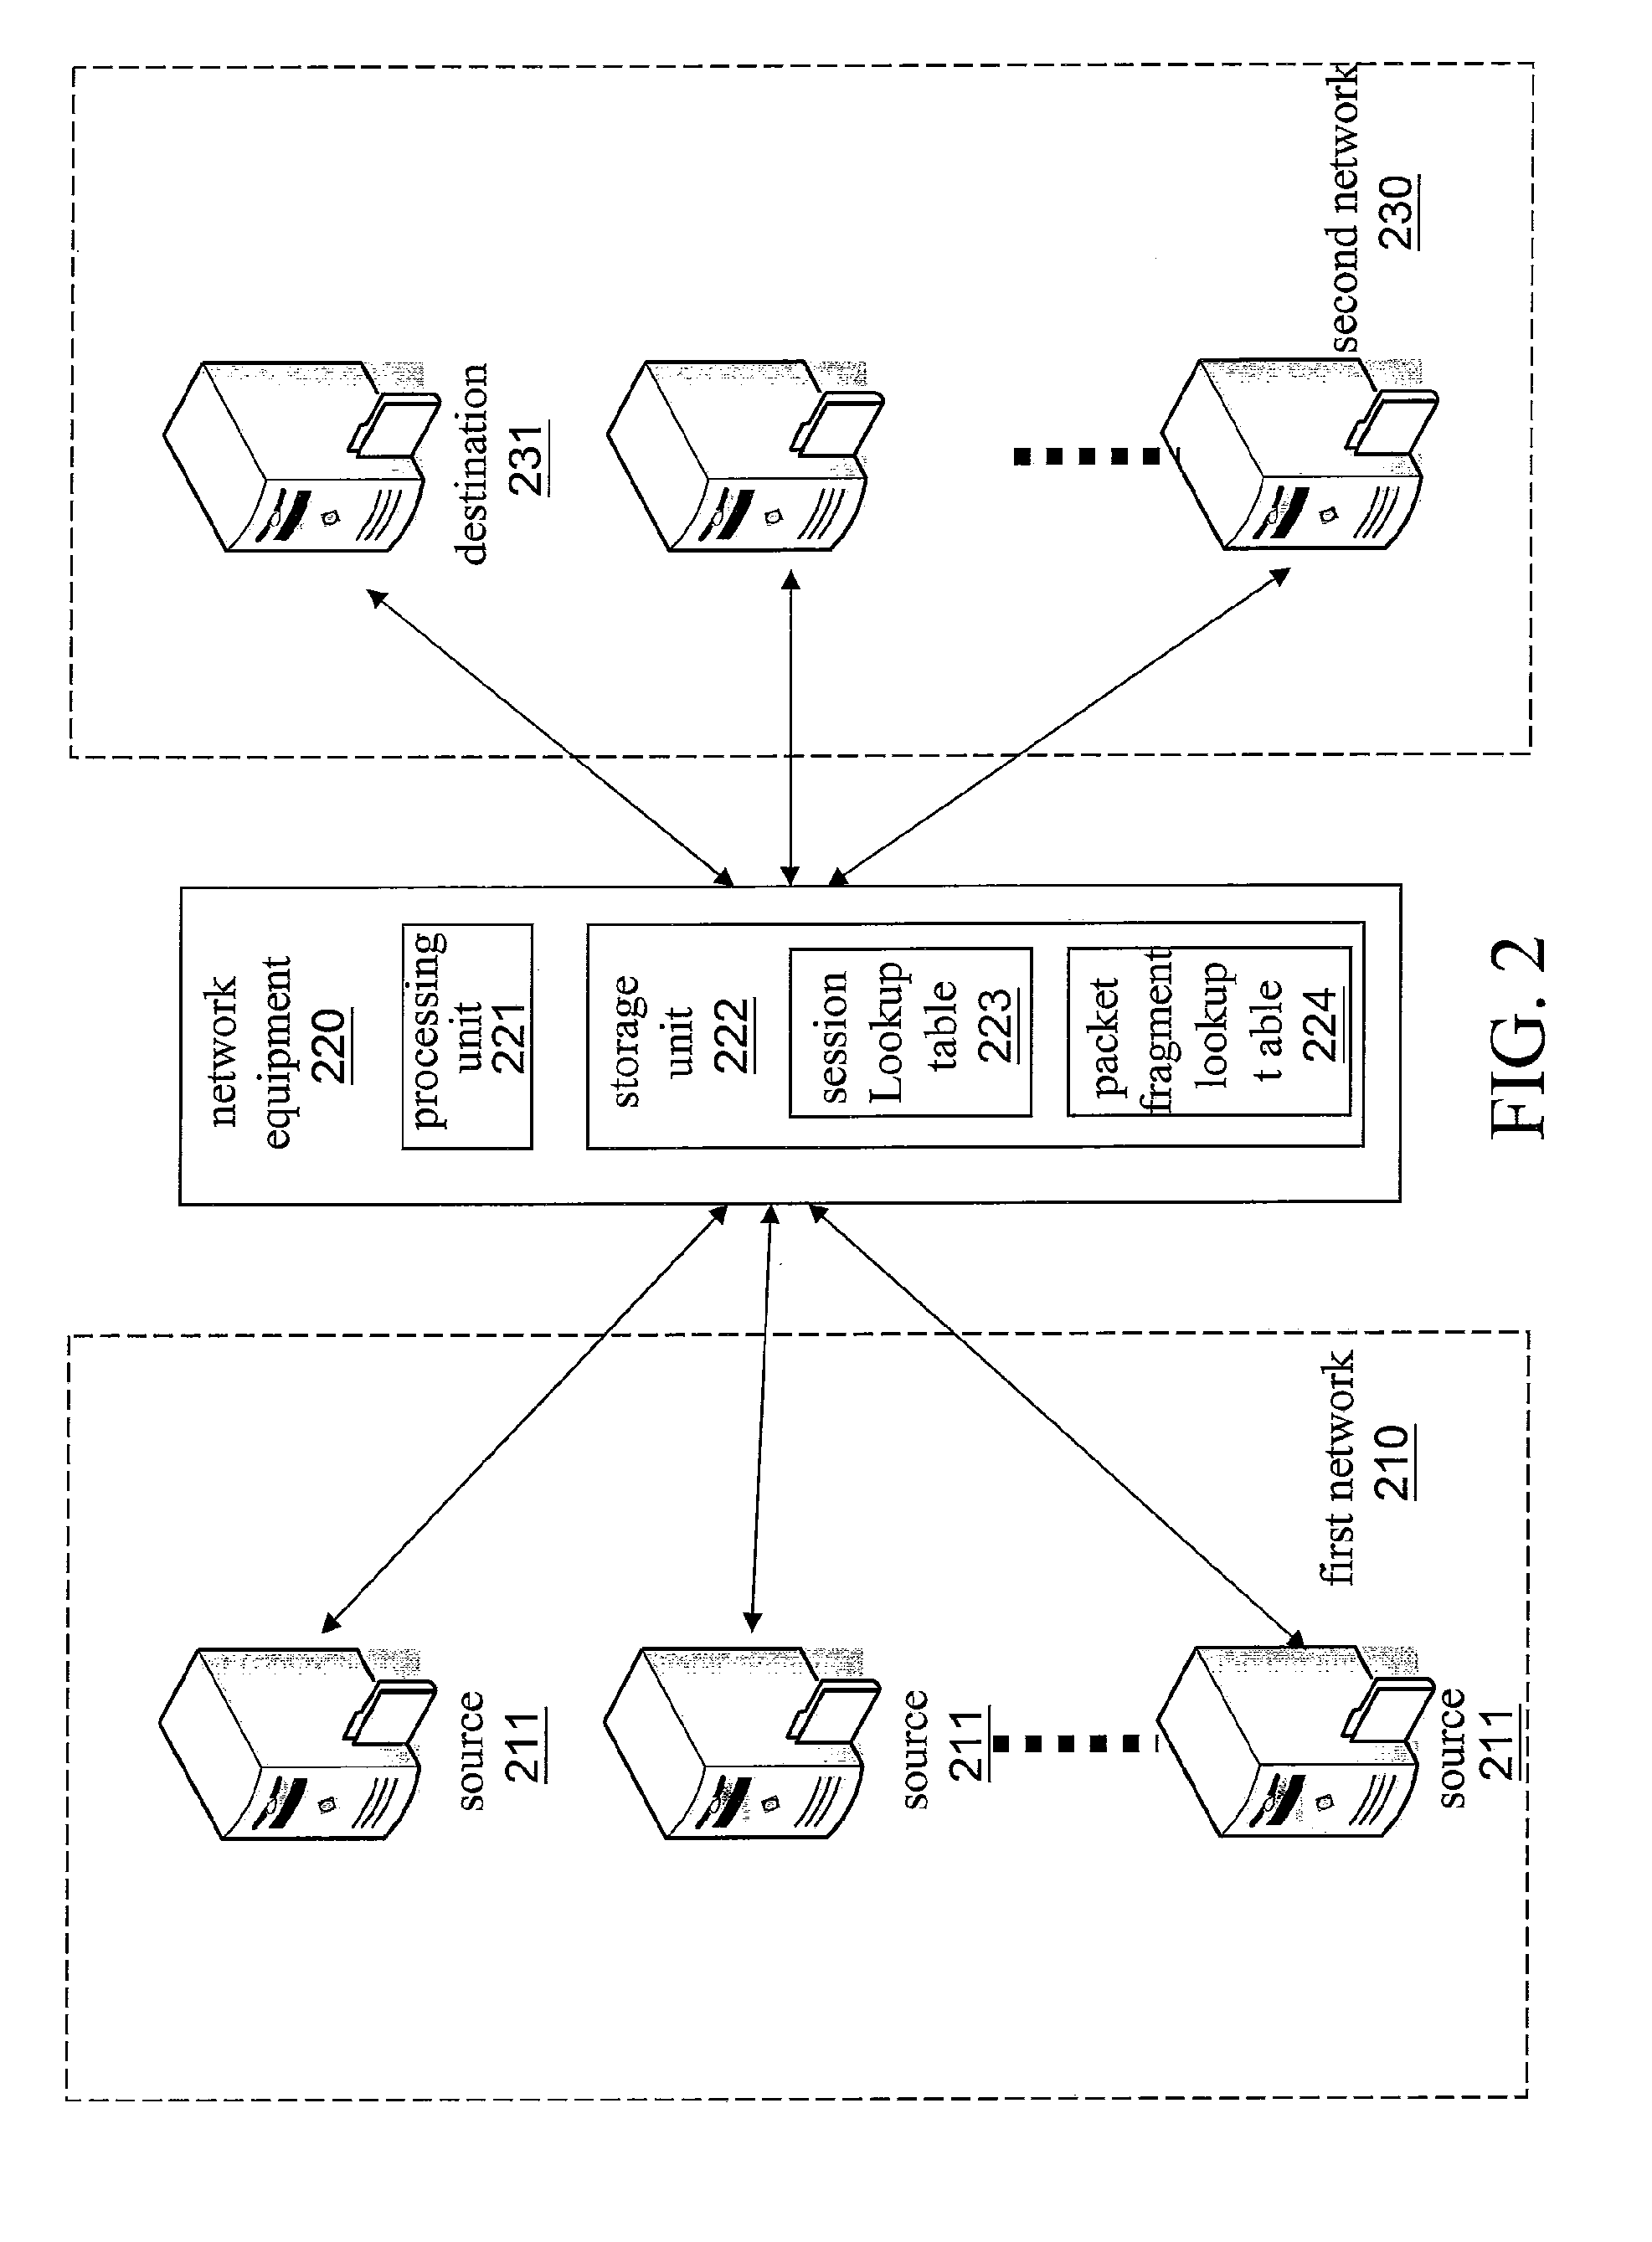 Method for processing network traffic loading balance